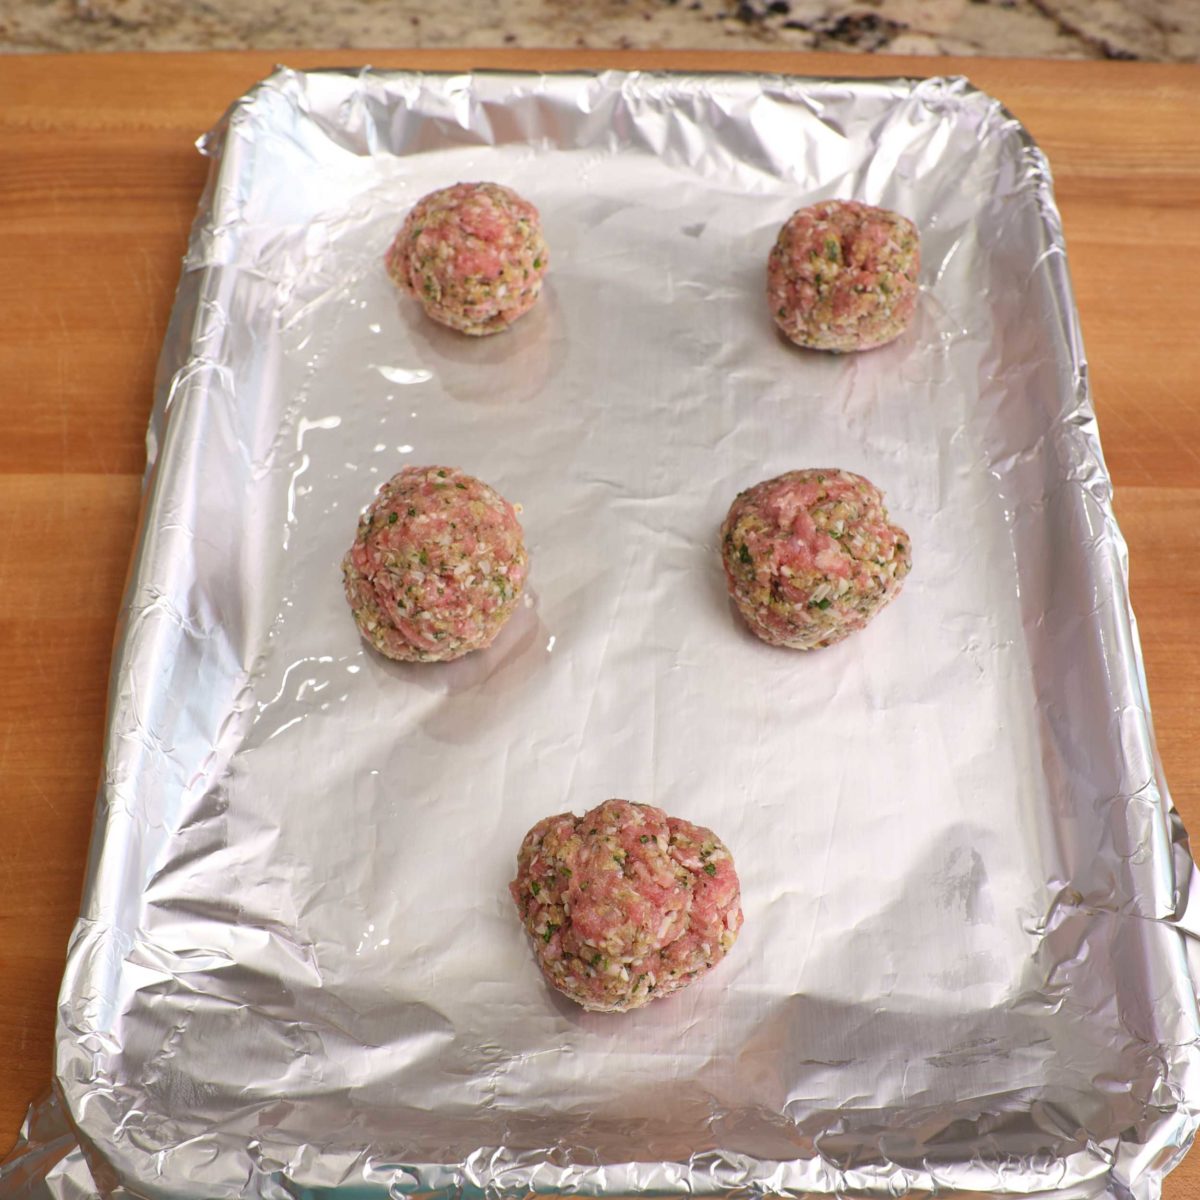 5 meatballs on a baking sheet.